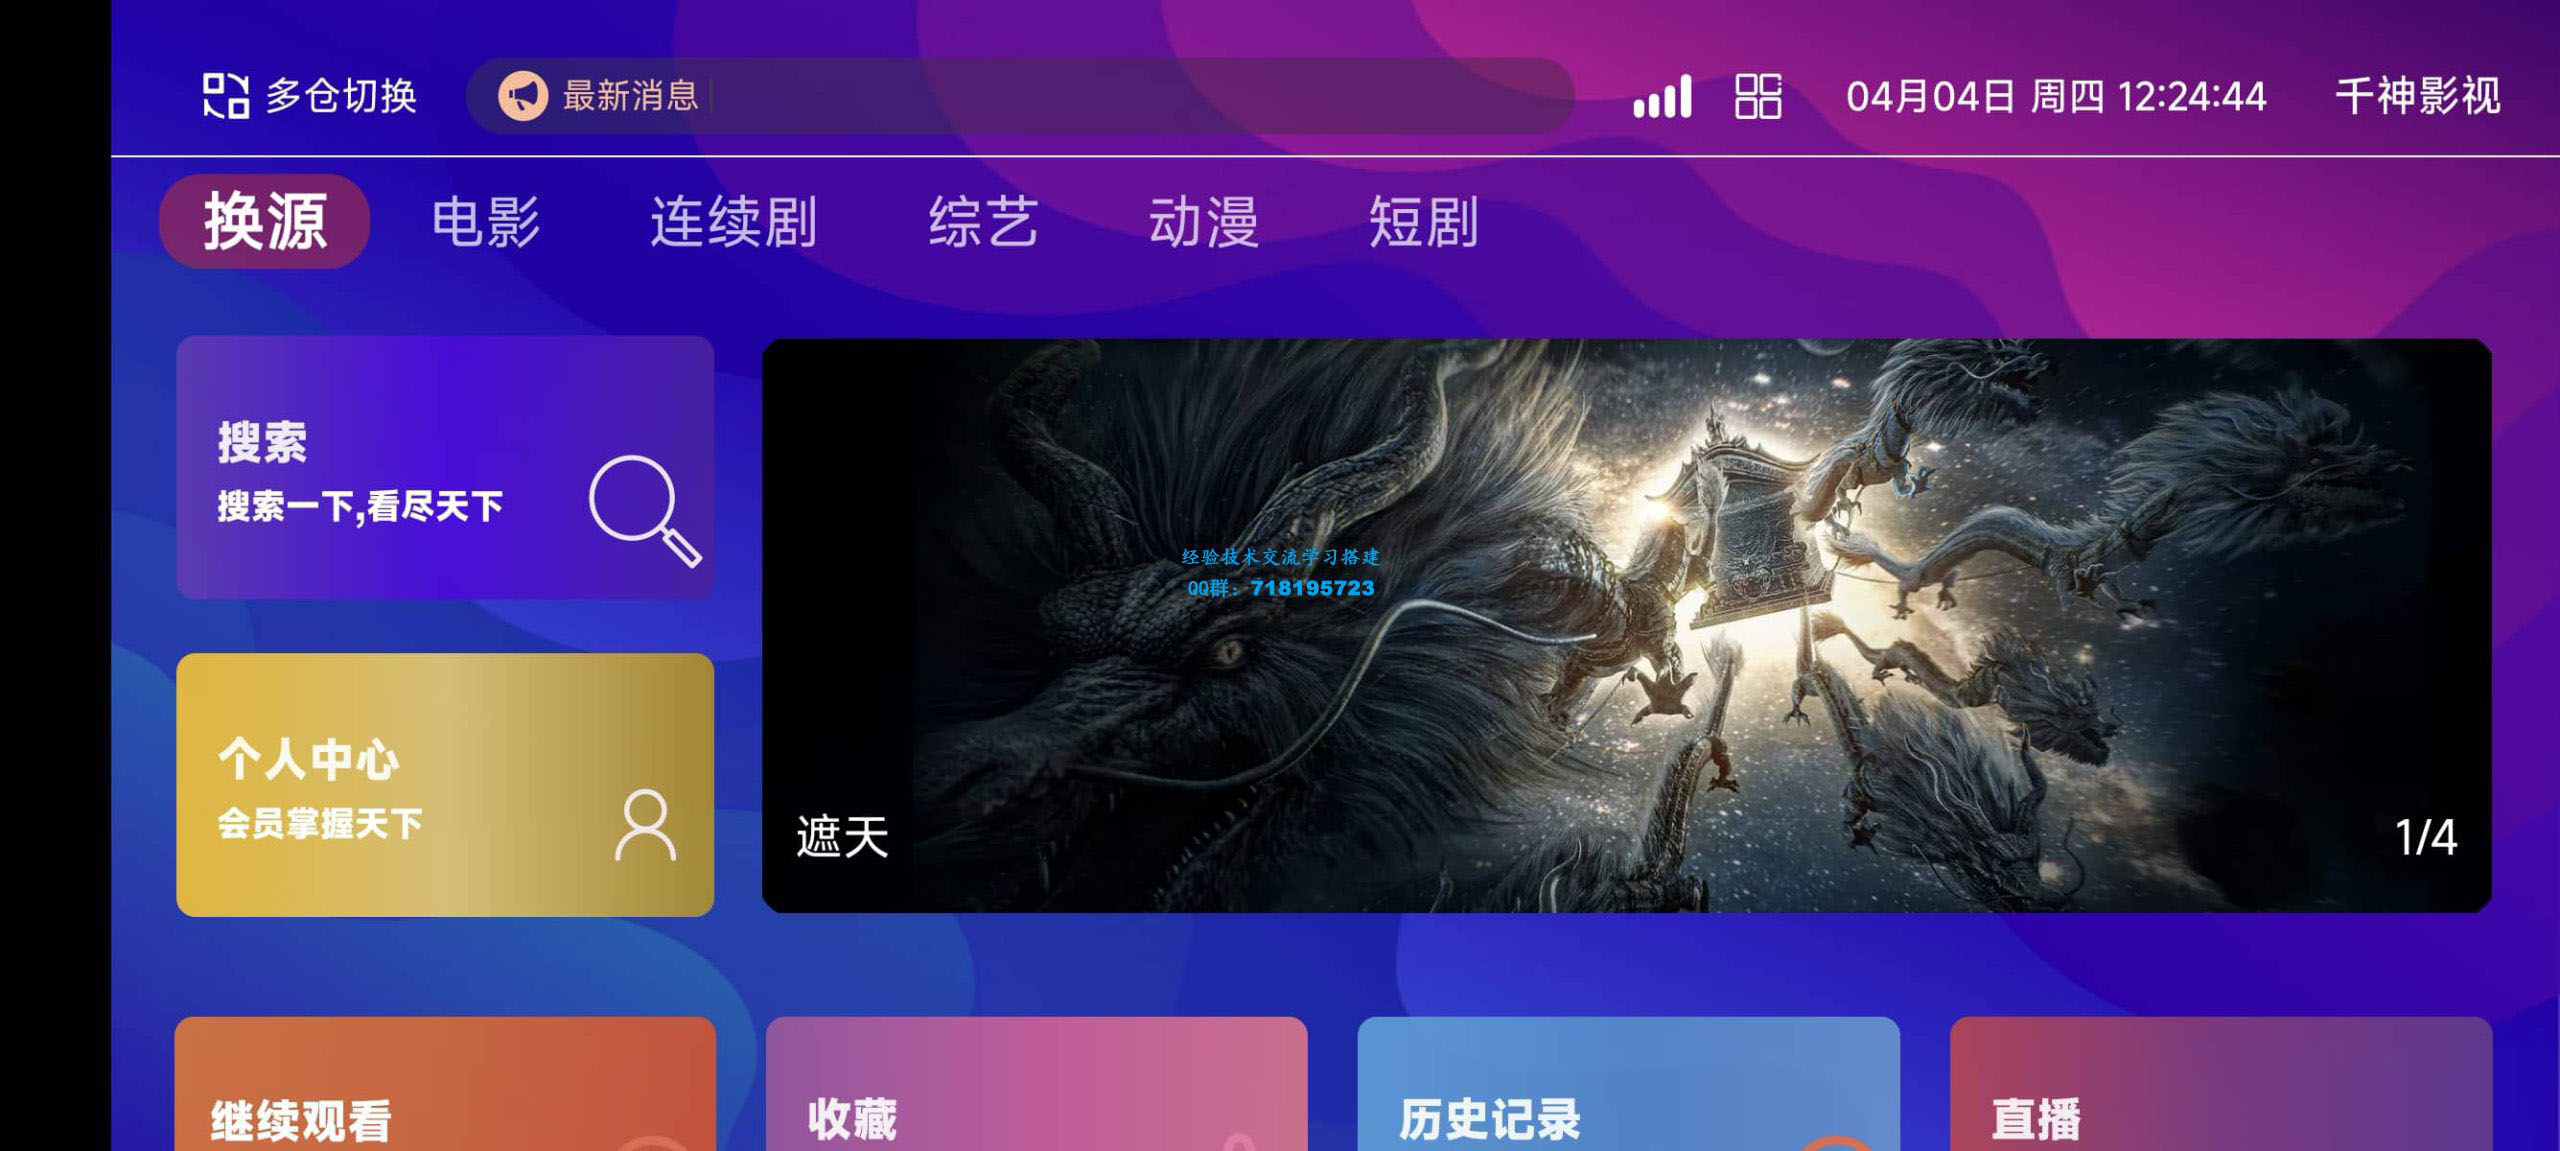     TVBox二次开发影视系统酷点1.4.4反编译版本
